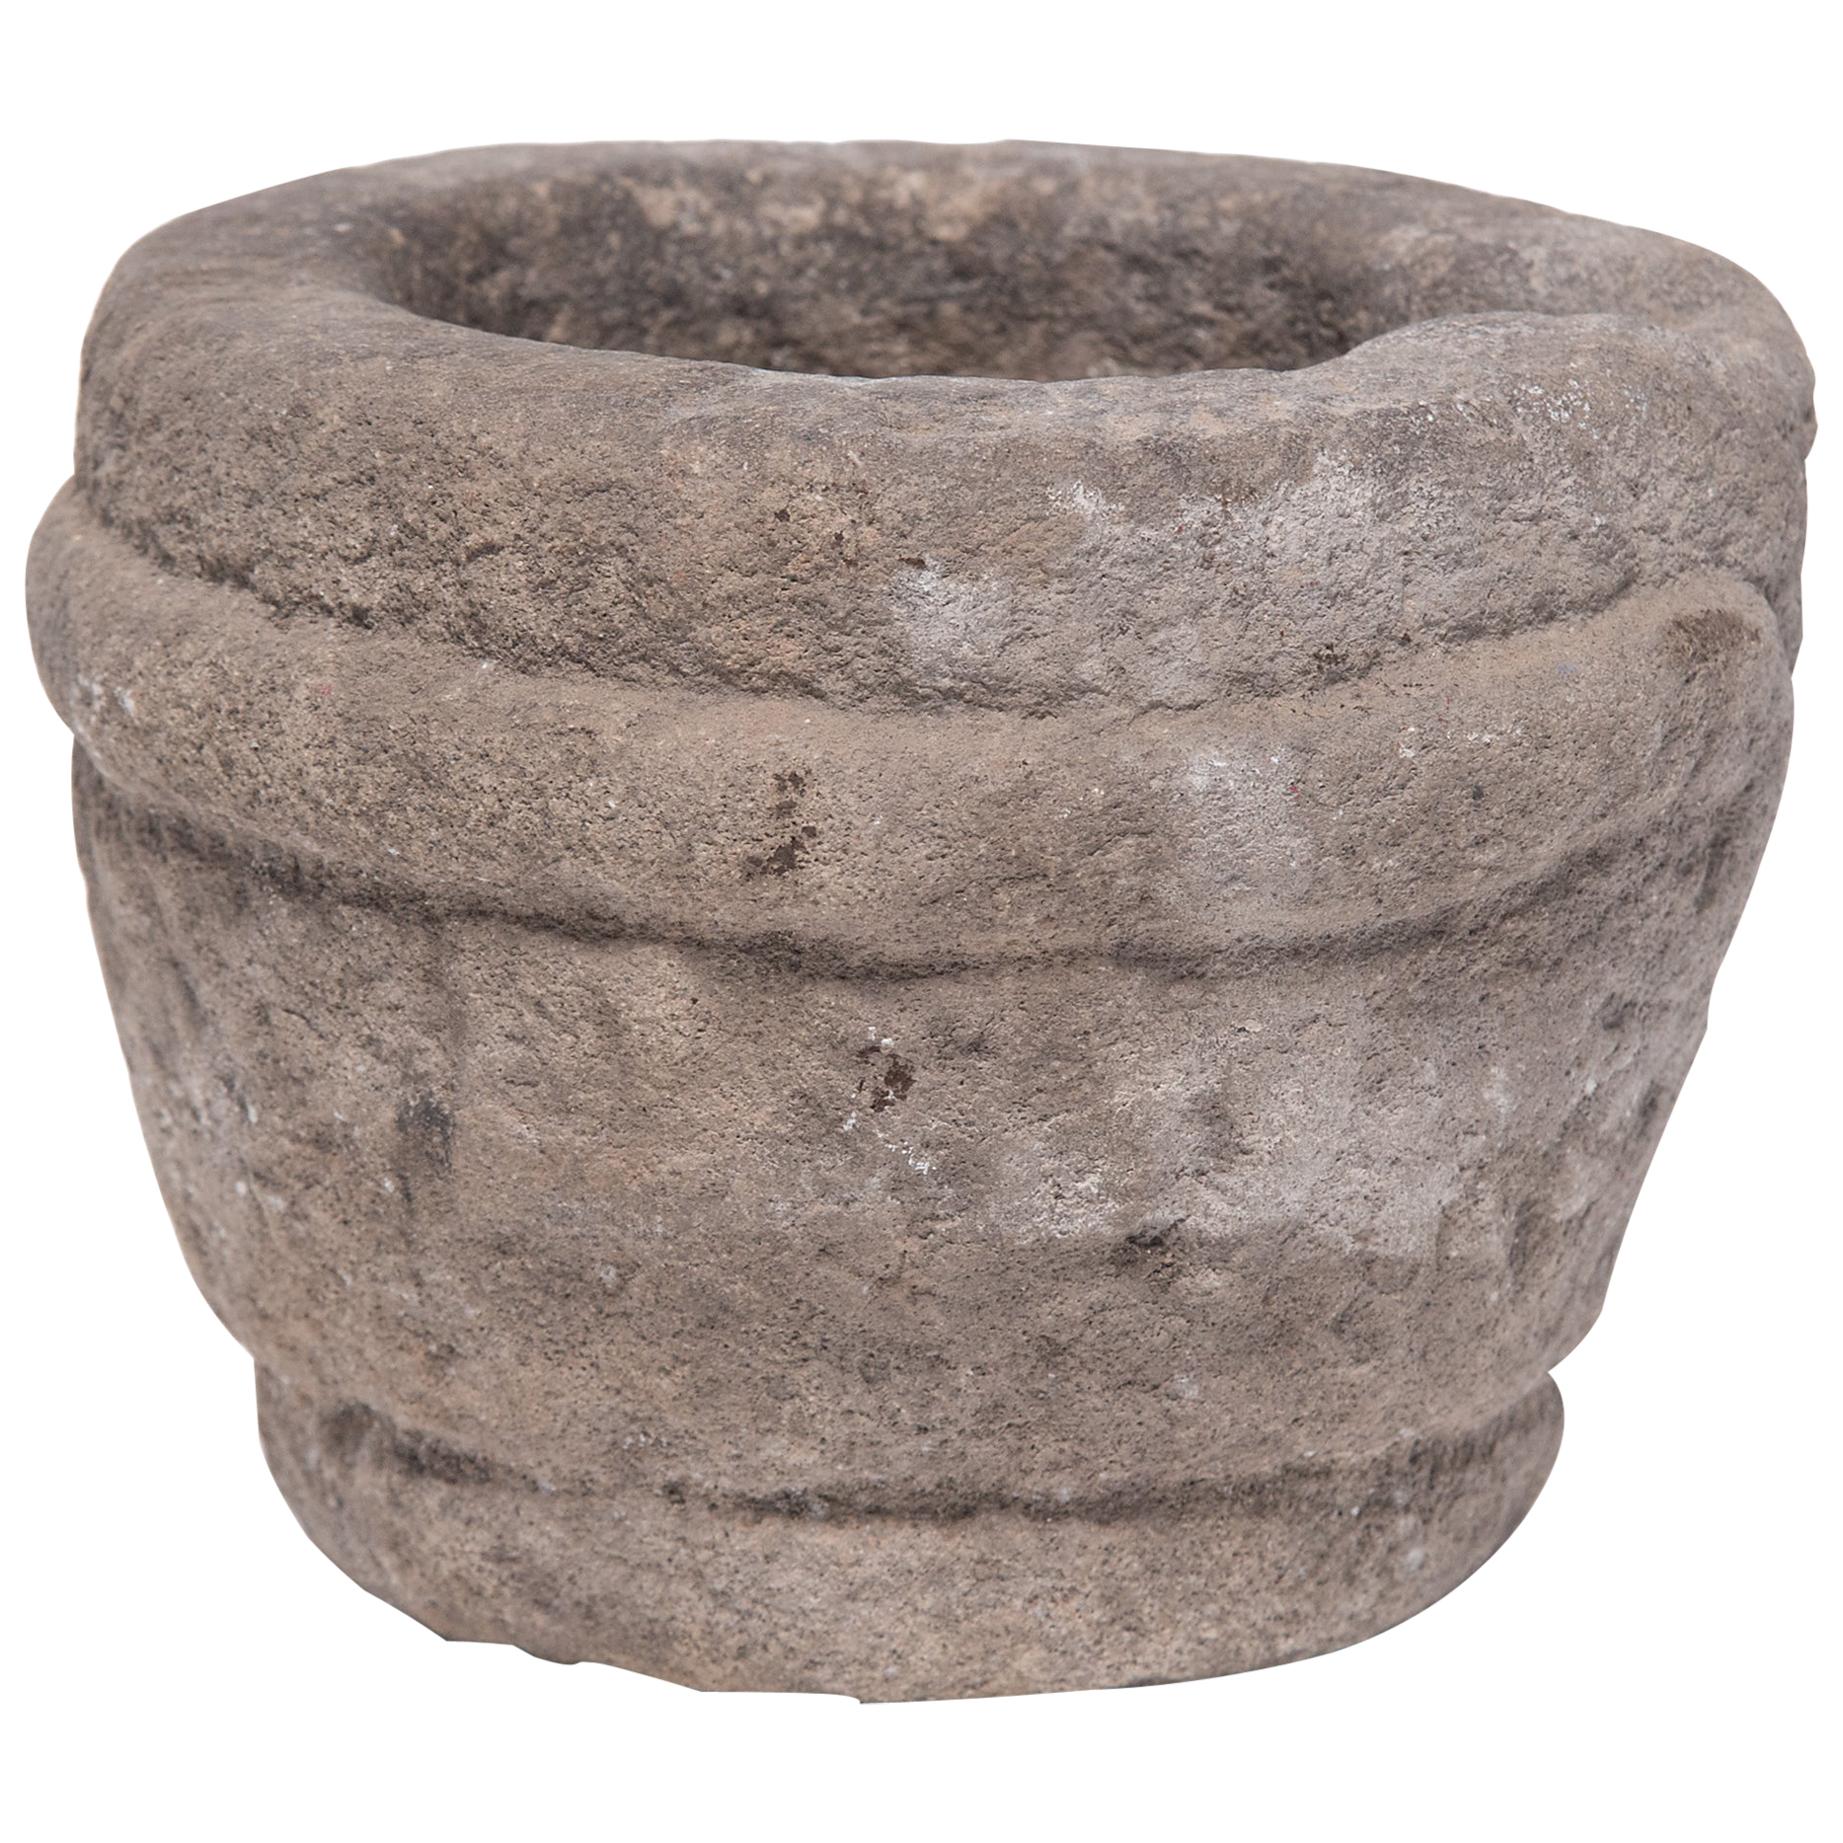 Chinese Stone Garlic Mortar, circa 1900